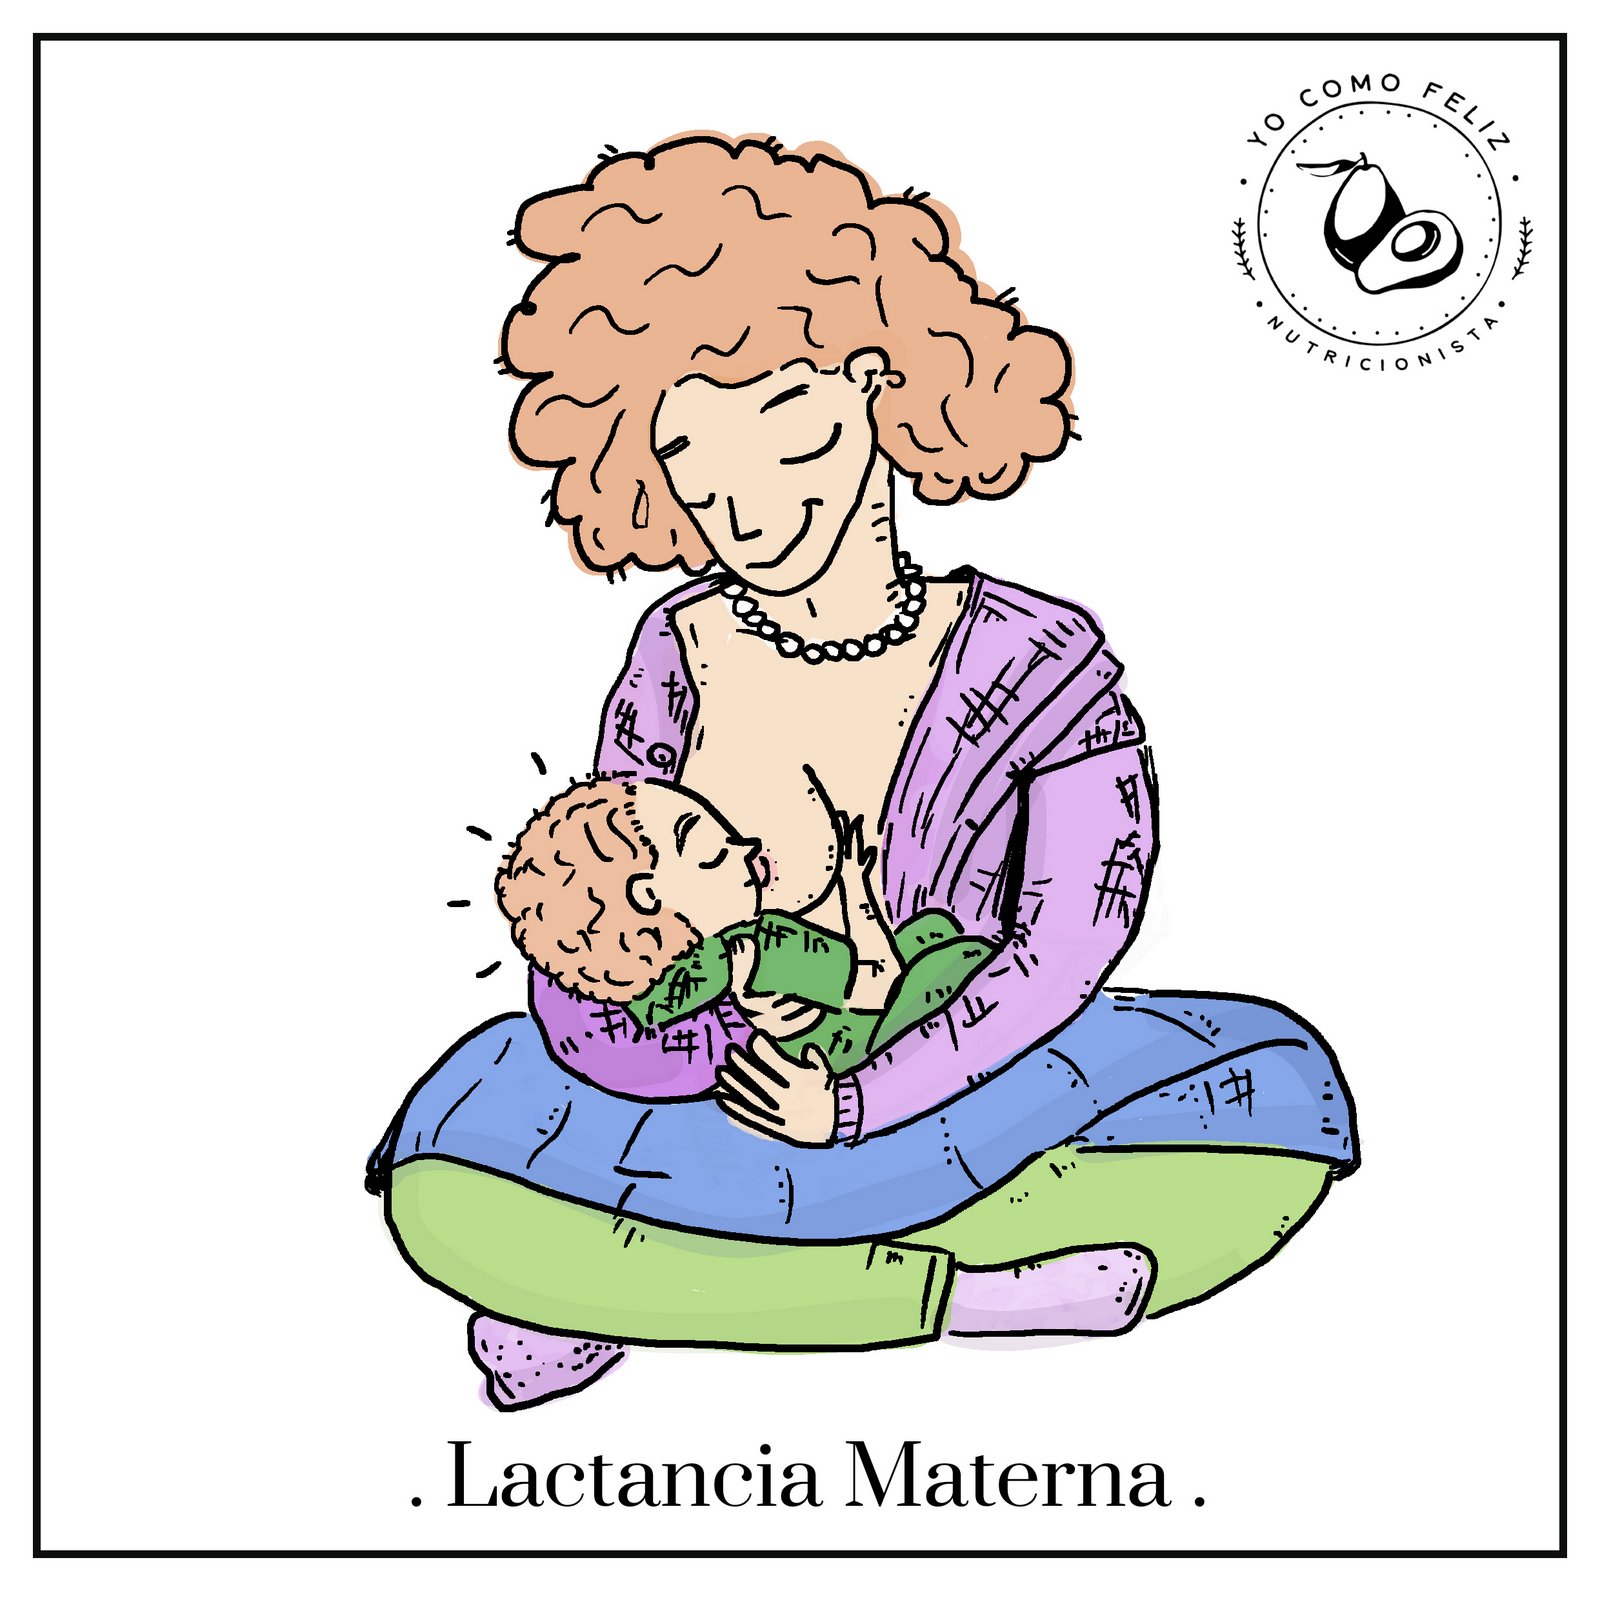 Semana Mundial de la Lactancia Materna - yocomofeliz